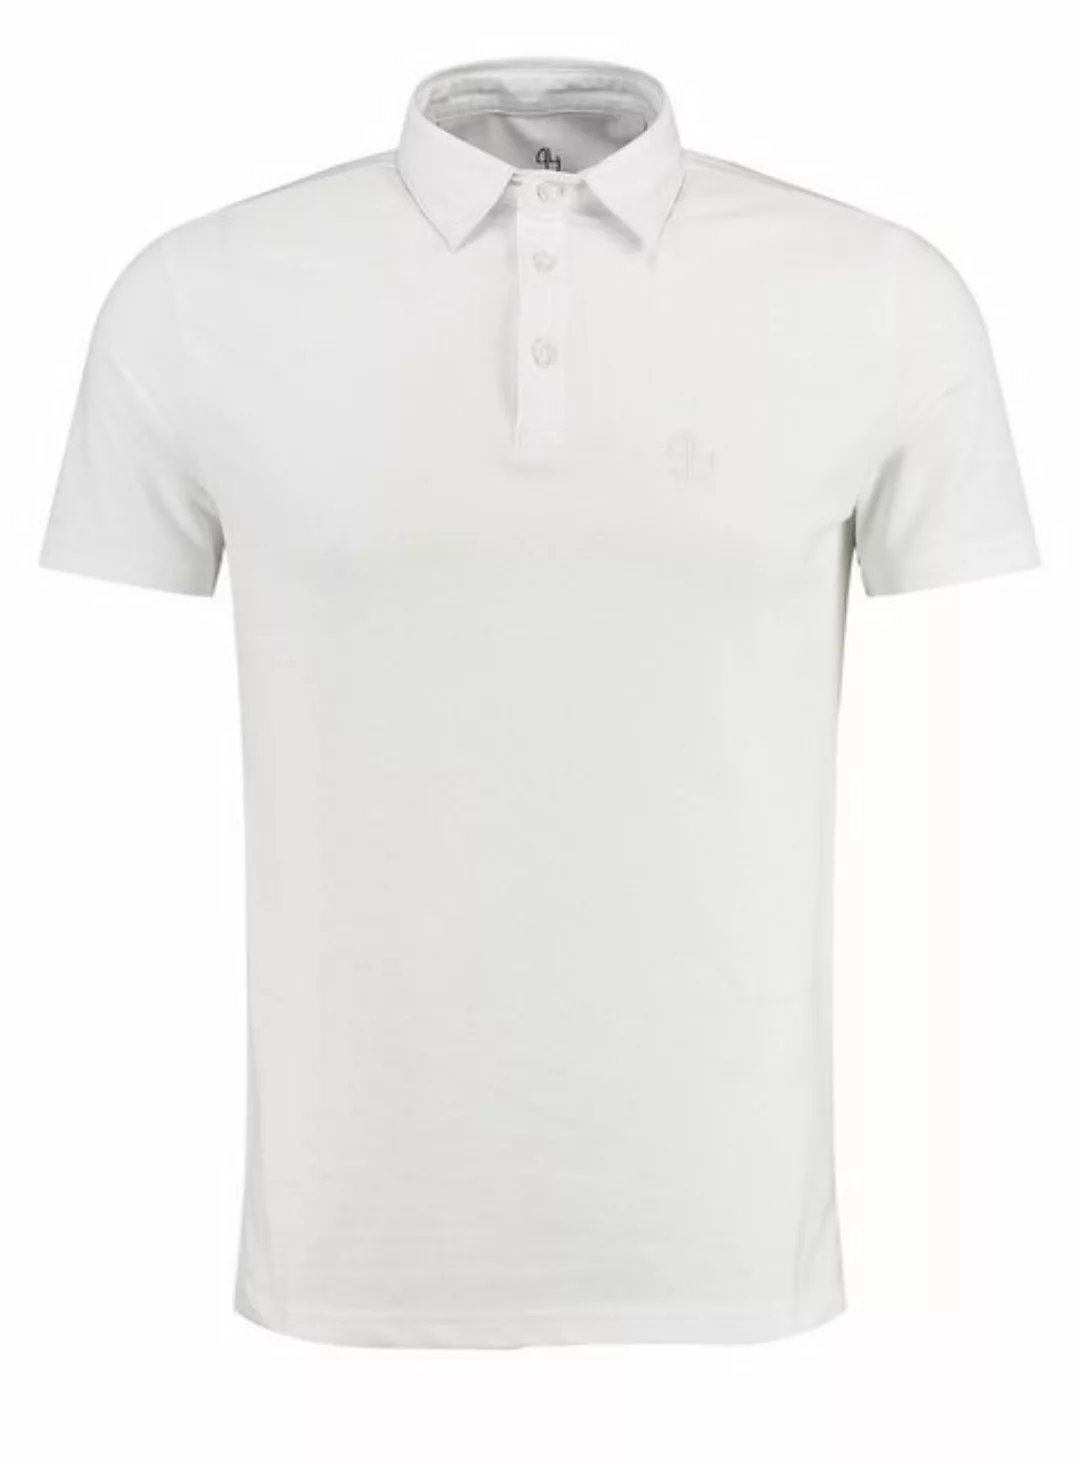 Key Largo Poloshirt Polo Shirt Diavola weicher Tragekomfort körperbetont MP günstig online kaufen